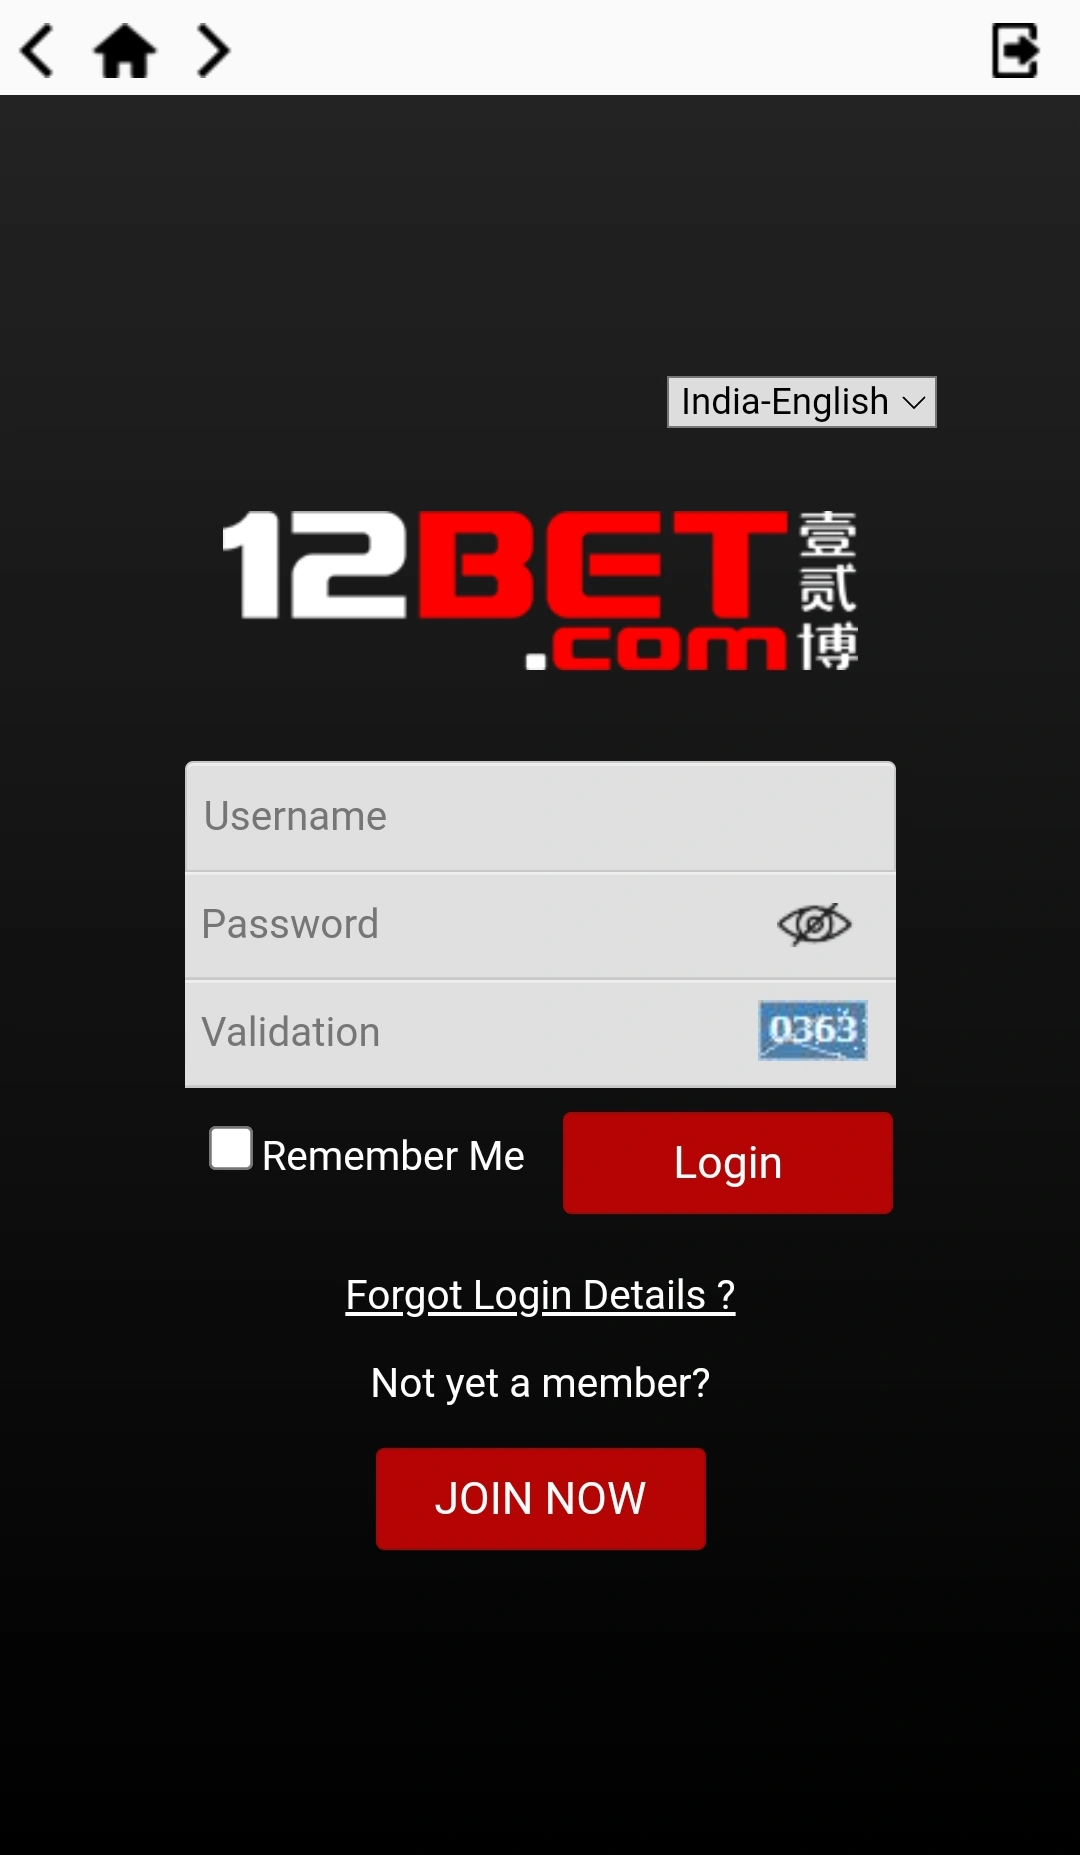 customer authorization window in the 12bet app